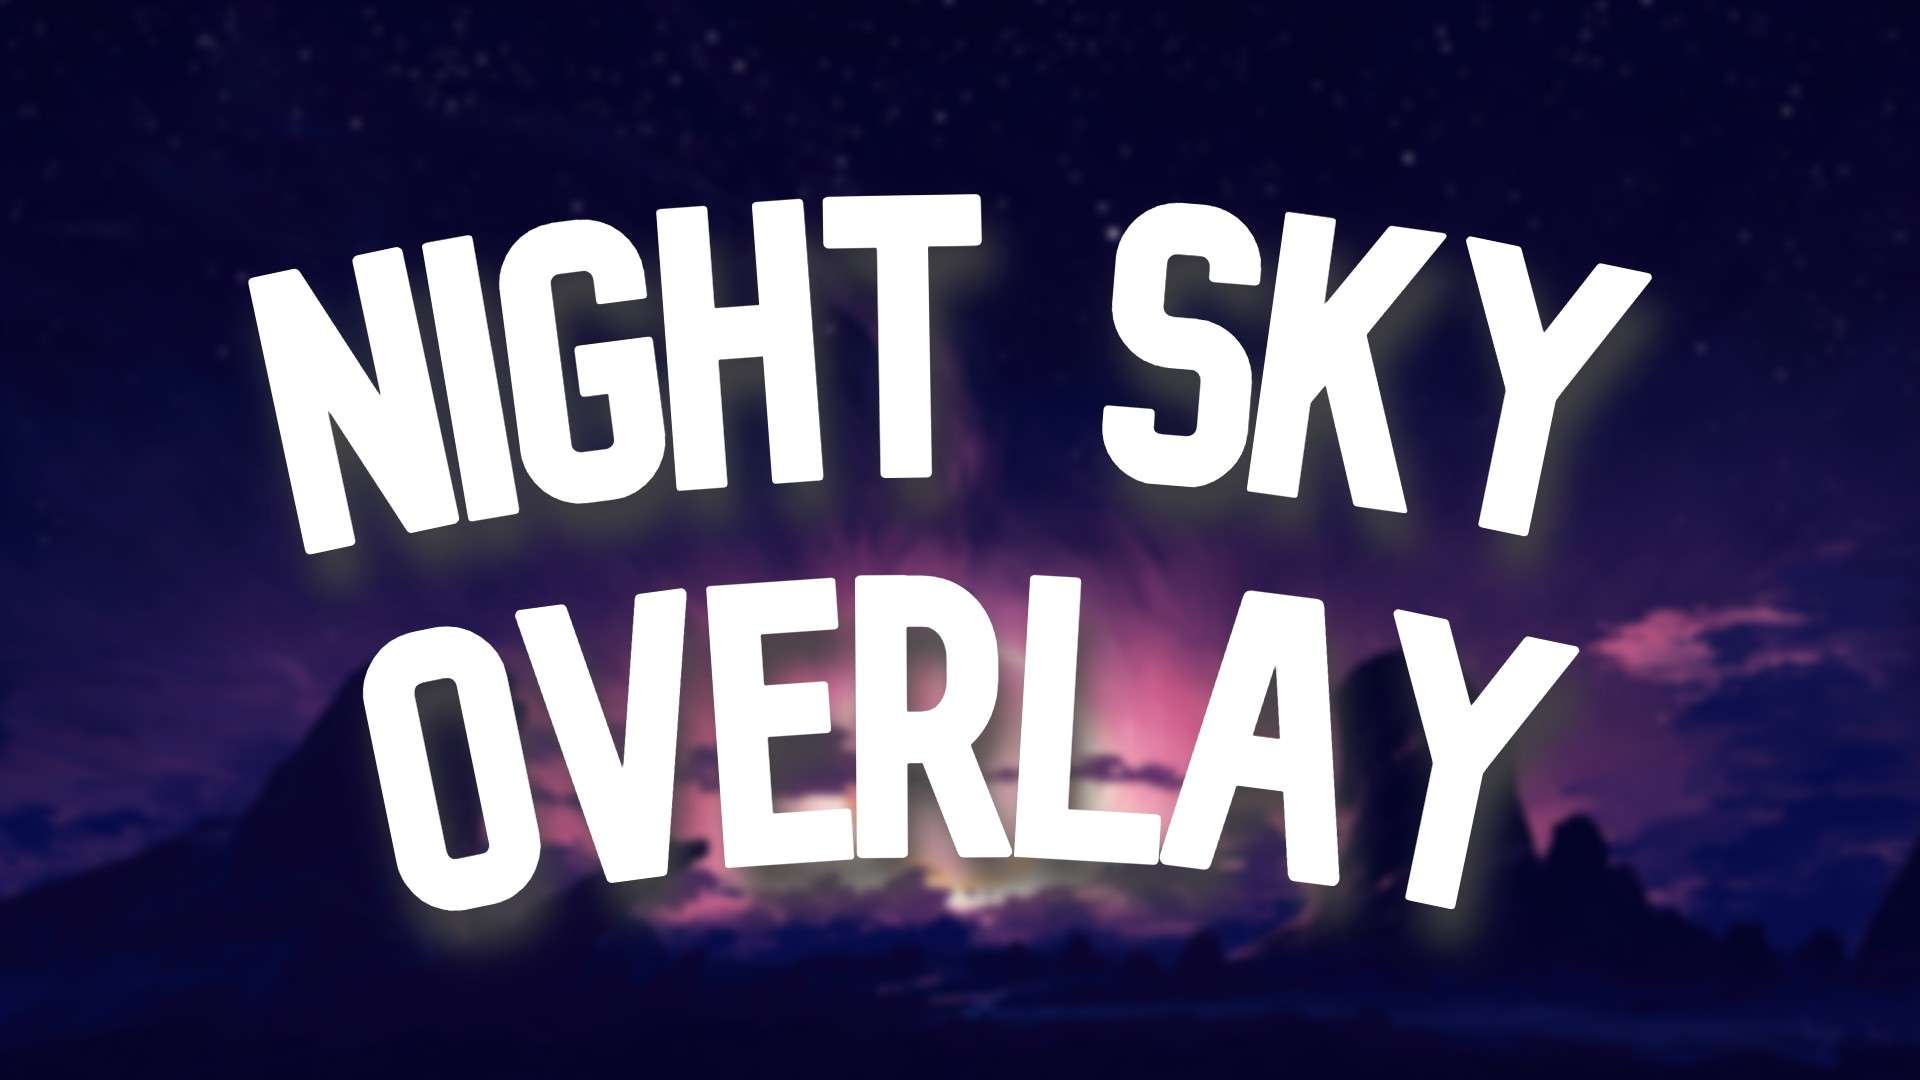 Night Sky Overlay #12 16 by rh56 on PvPRP